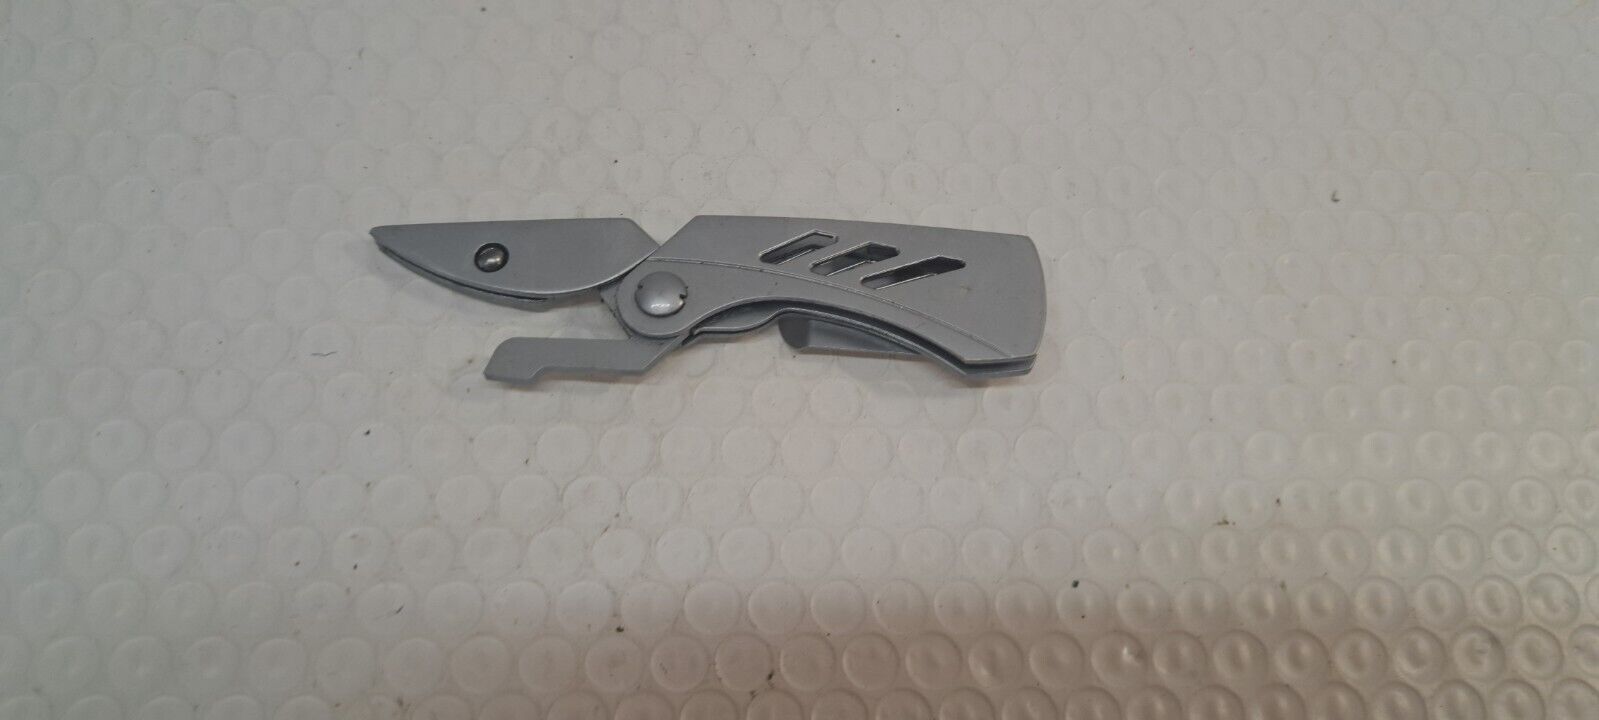 Gerber EAB Utility Razor Blade Box Cutter Pocket Folding Knife Removable Blade